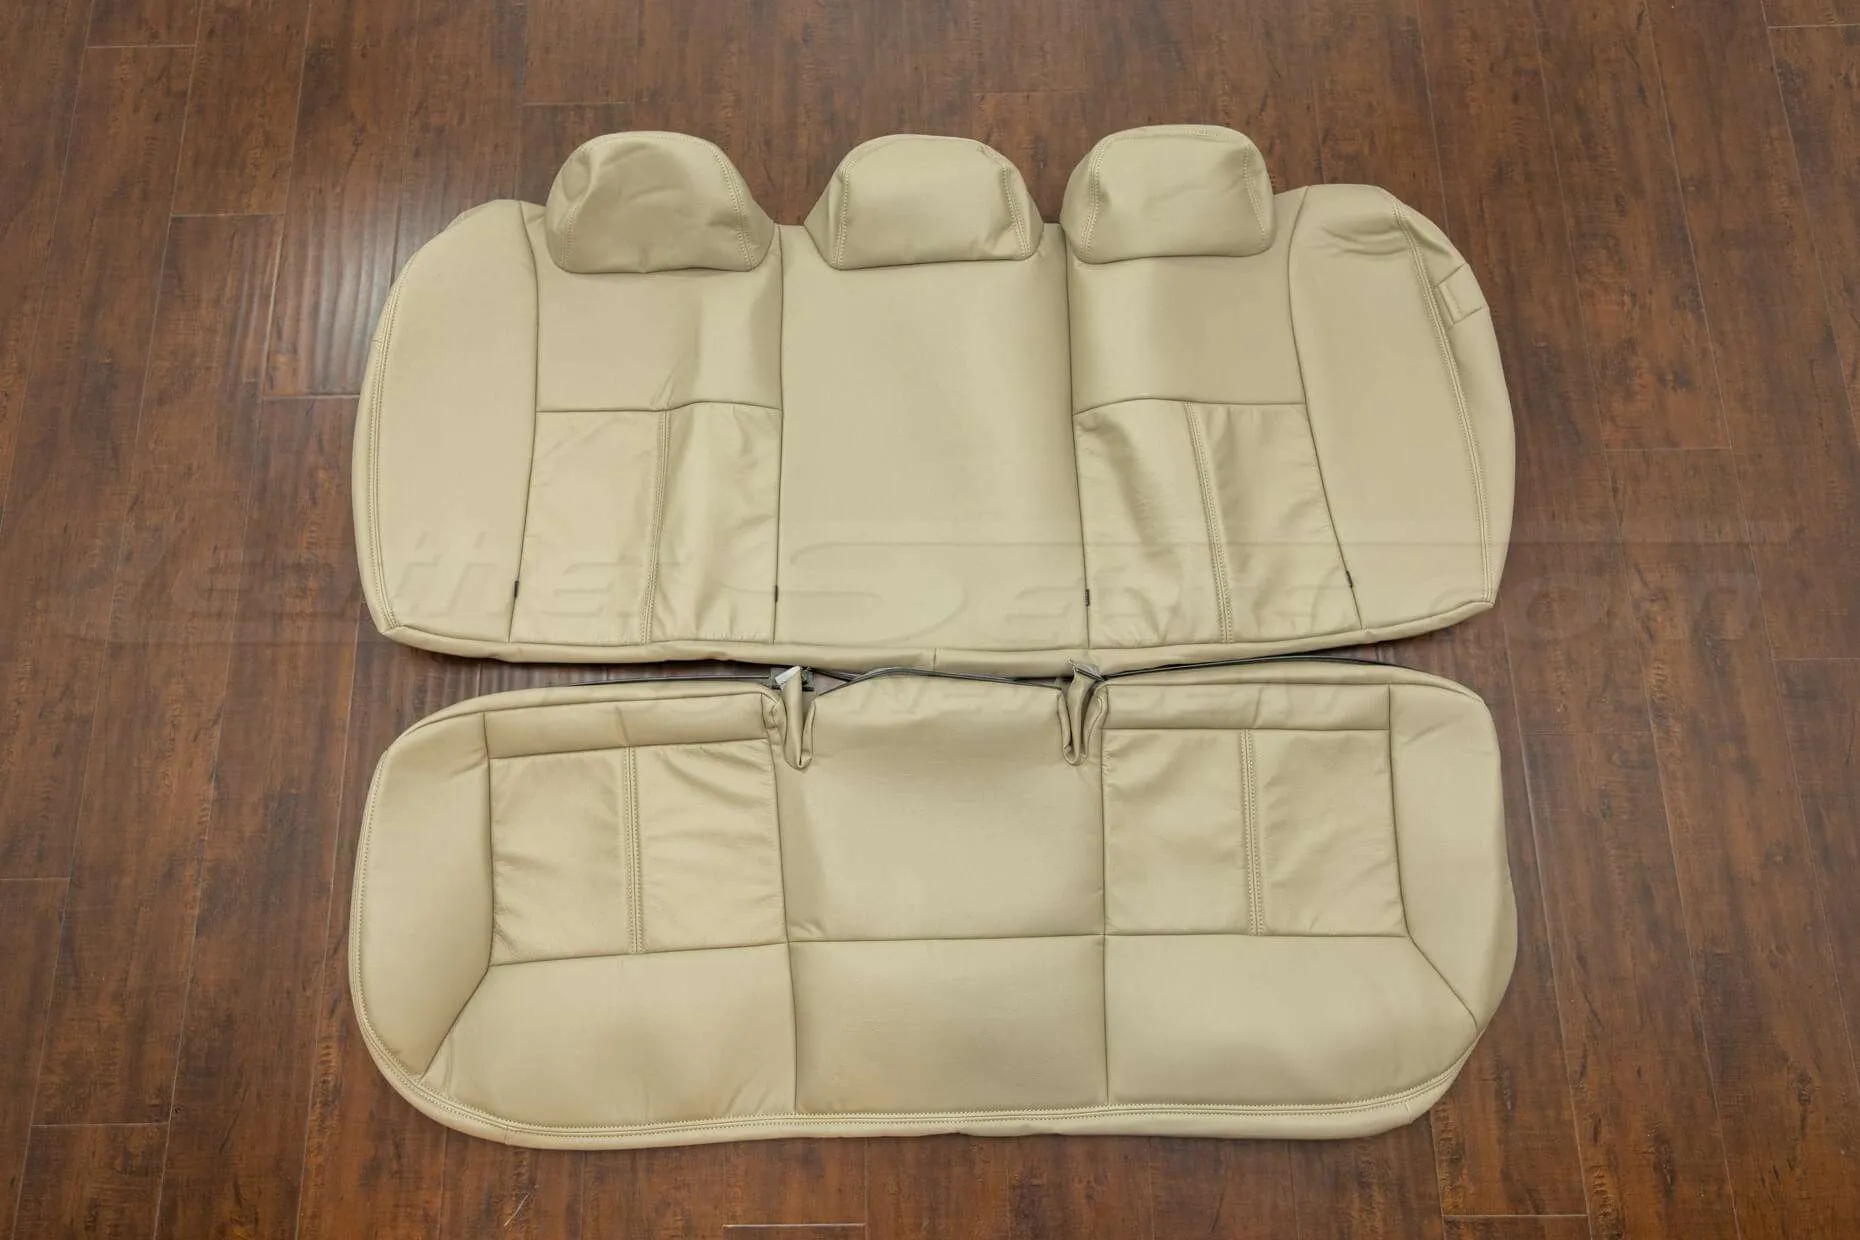 Chevrolet Impala SS Leather upholstery kit - rear seats